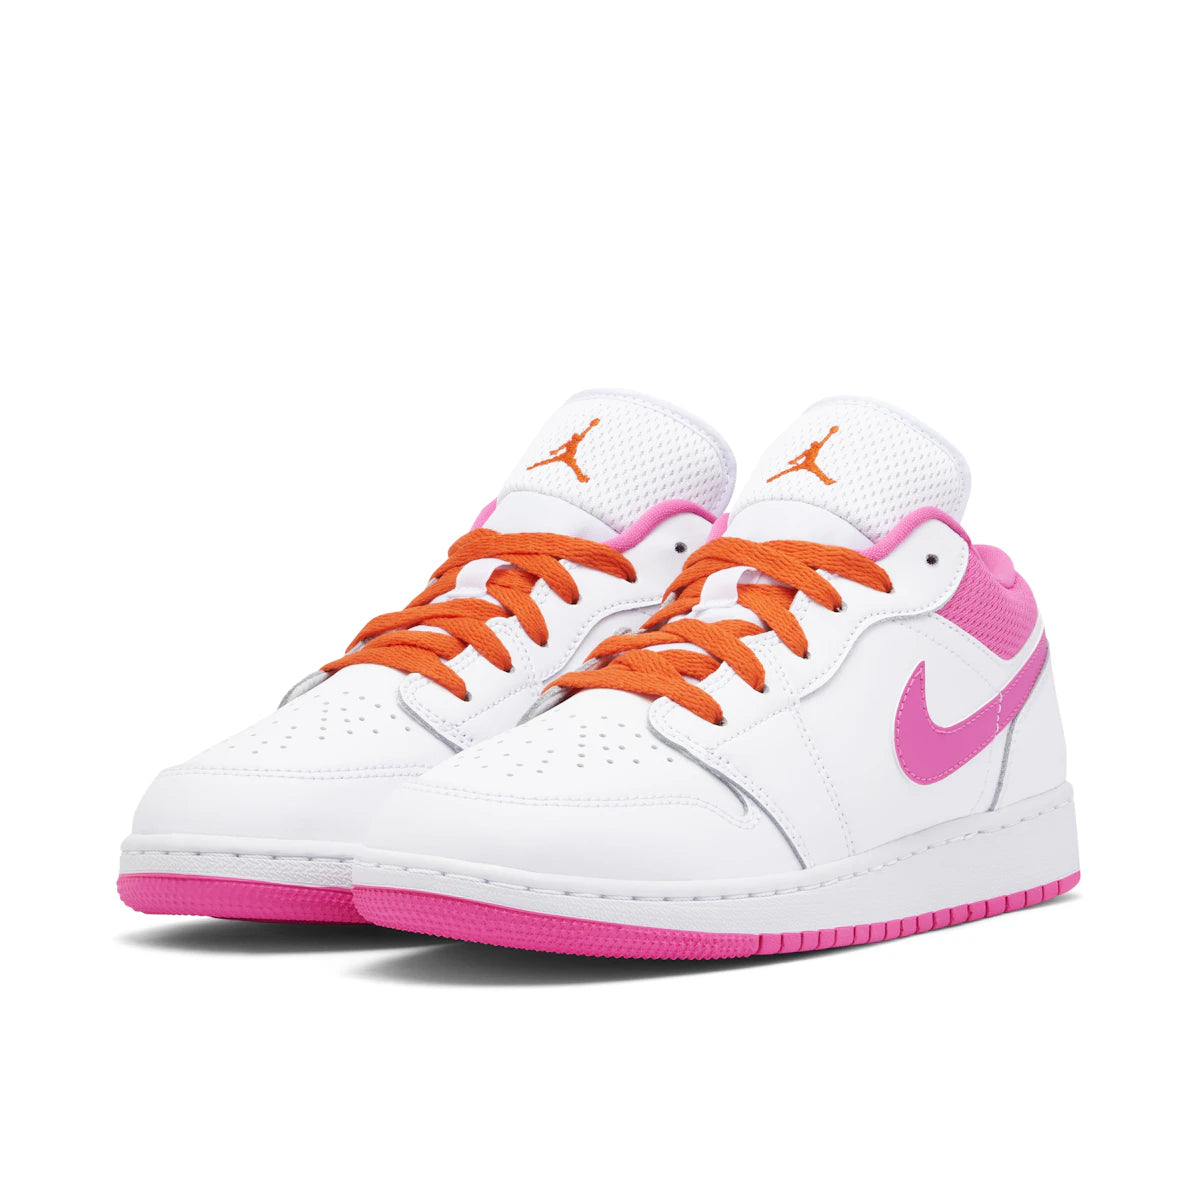 Jordan 1 Low Pinksicle Orange (GS) by Nike from £75.00